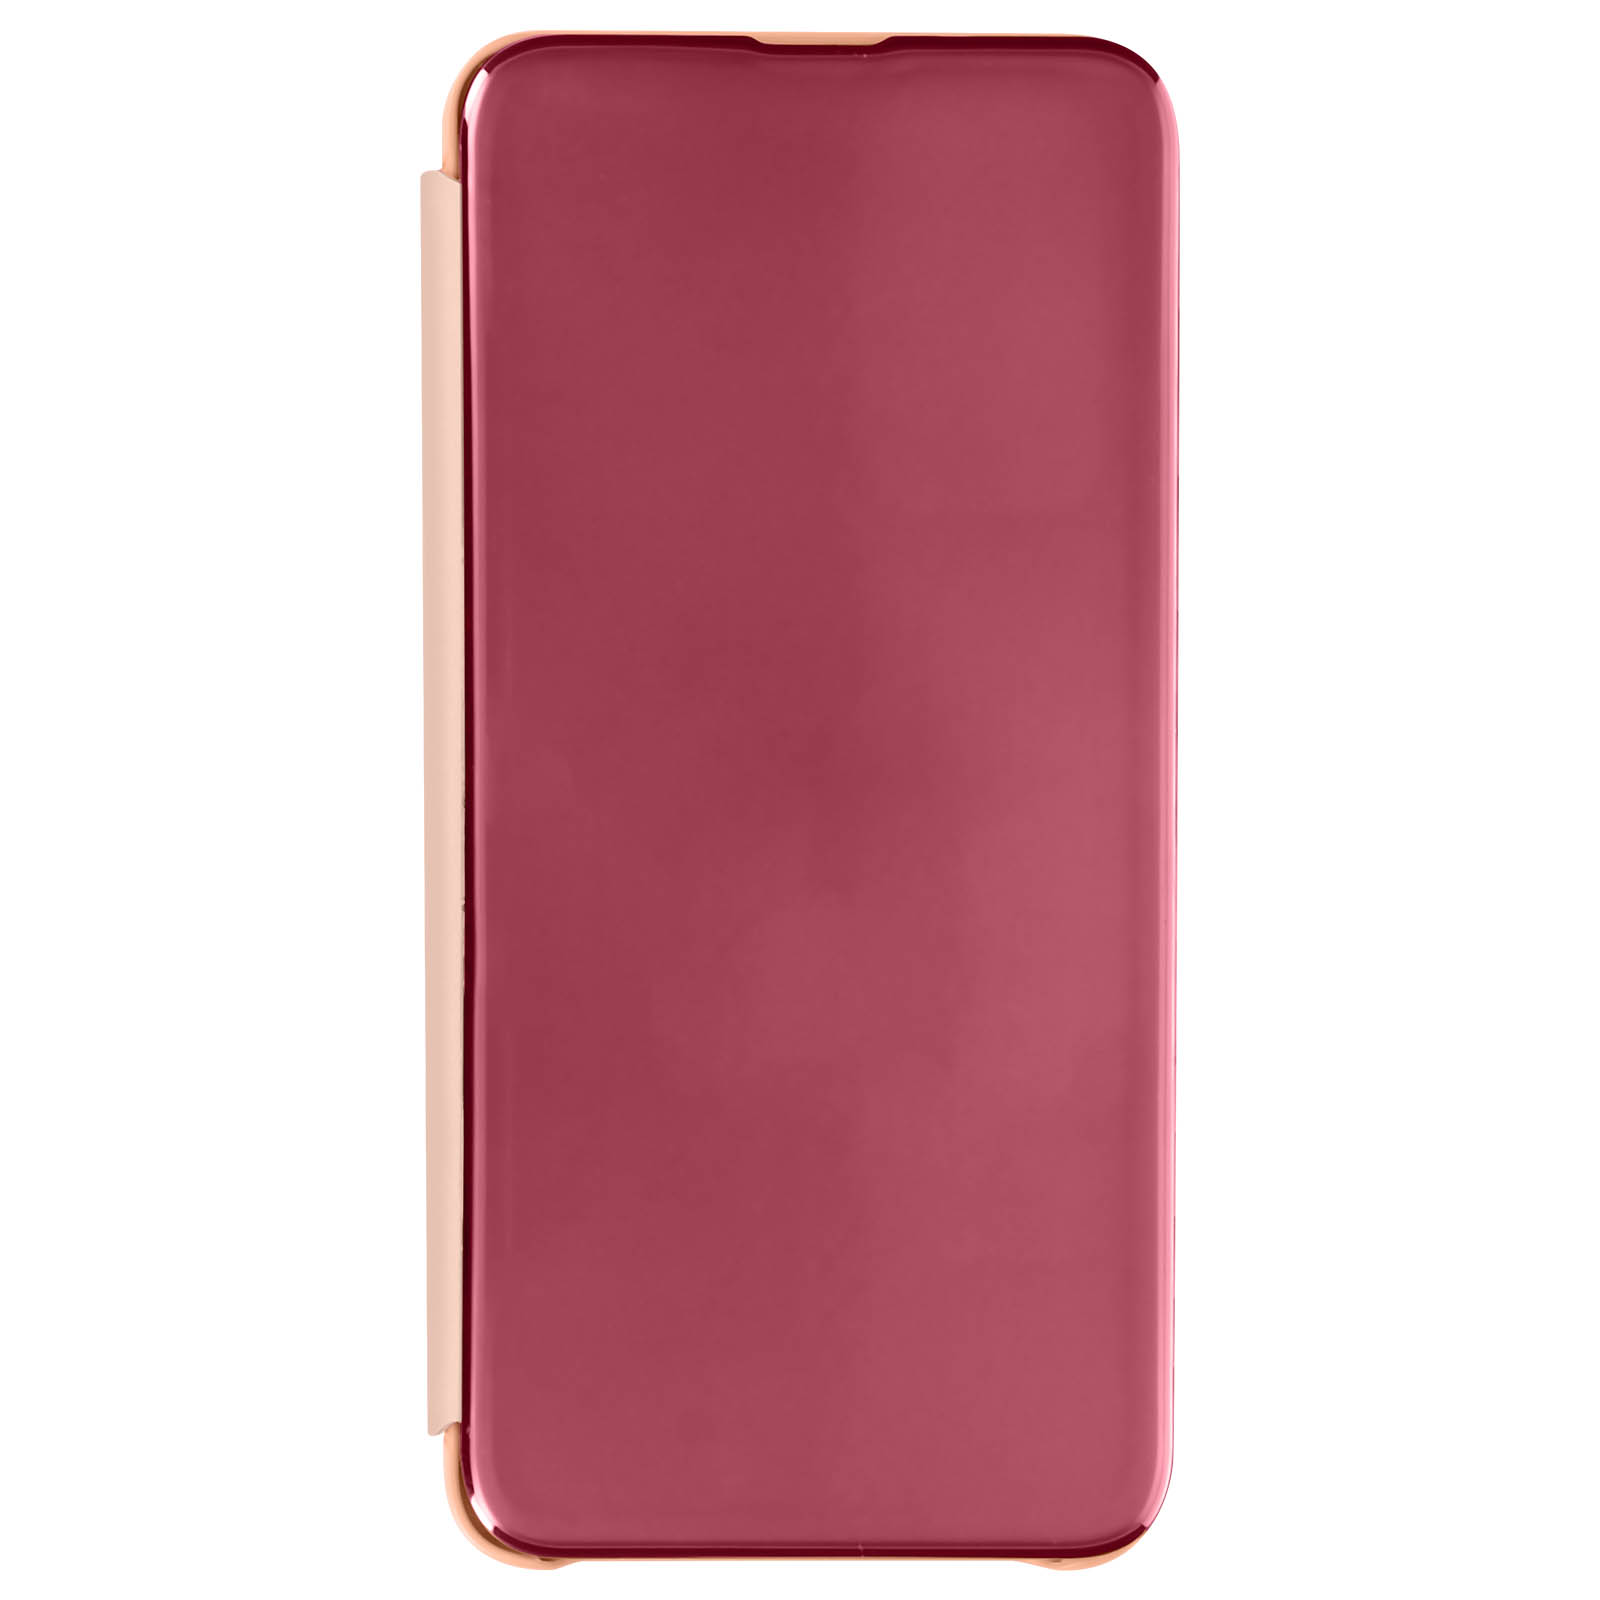 11S 5G, Spiegeleffekt Bookcover, AVIZAR Note Xiaomi, Redmi Series, Rosegold